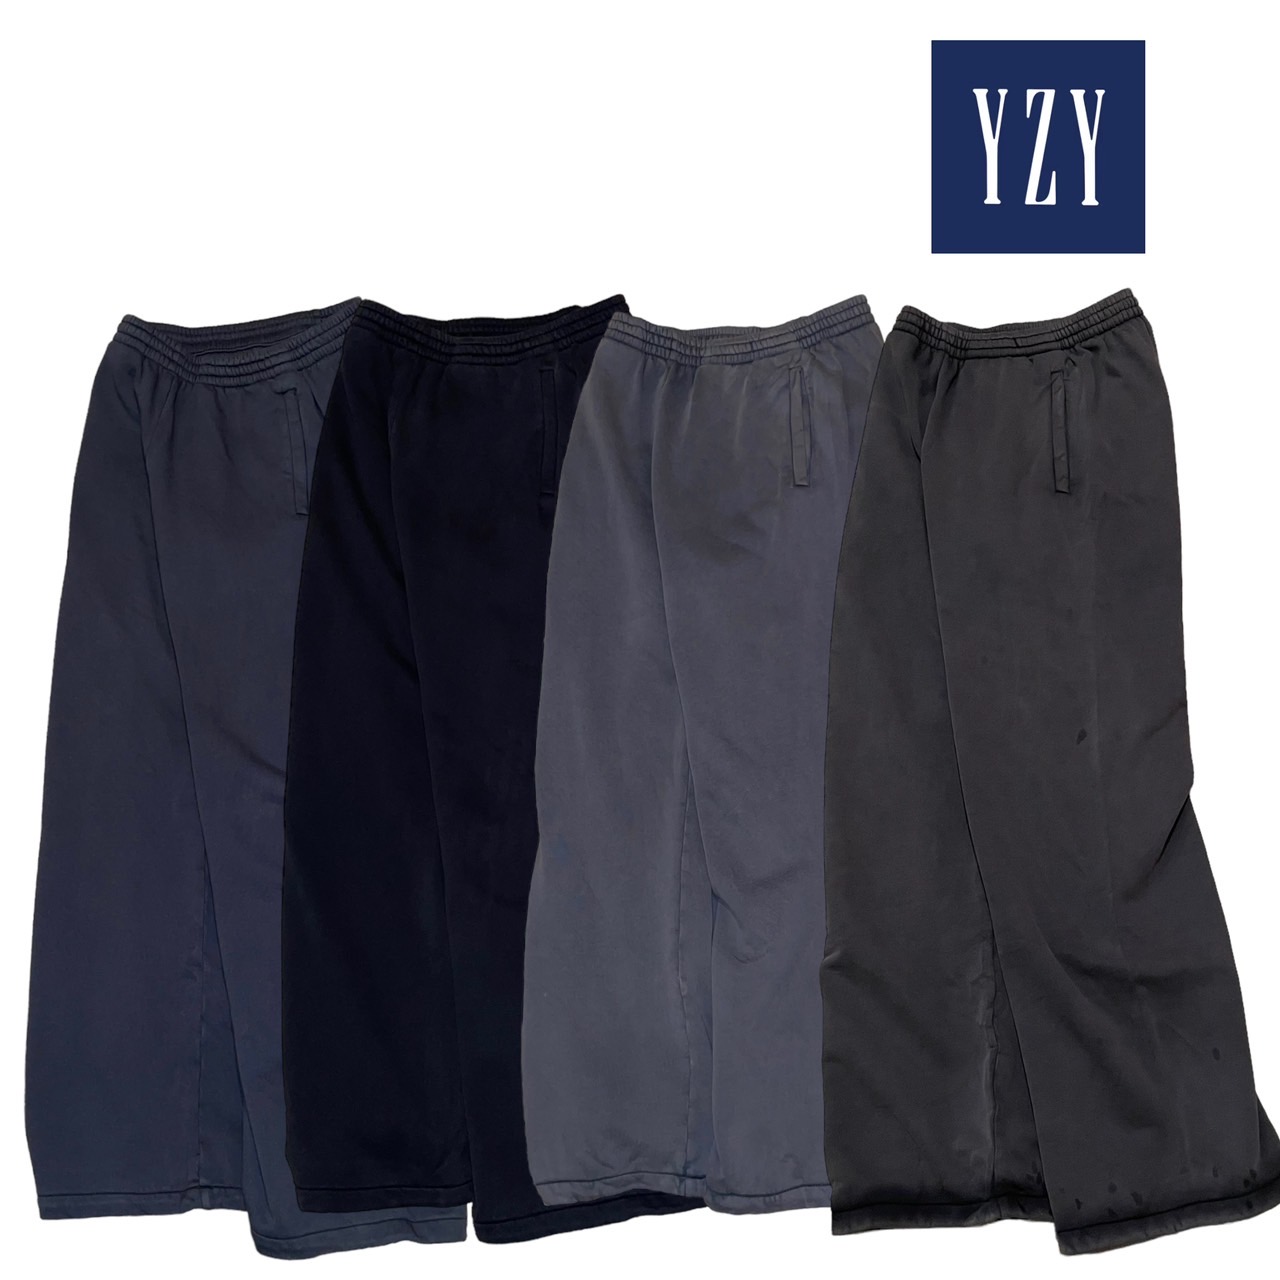 Unreleased YEEZY GAP zip up hoodies & sweatpants releasing in Japan